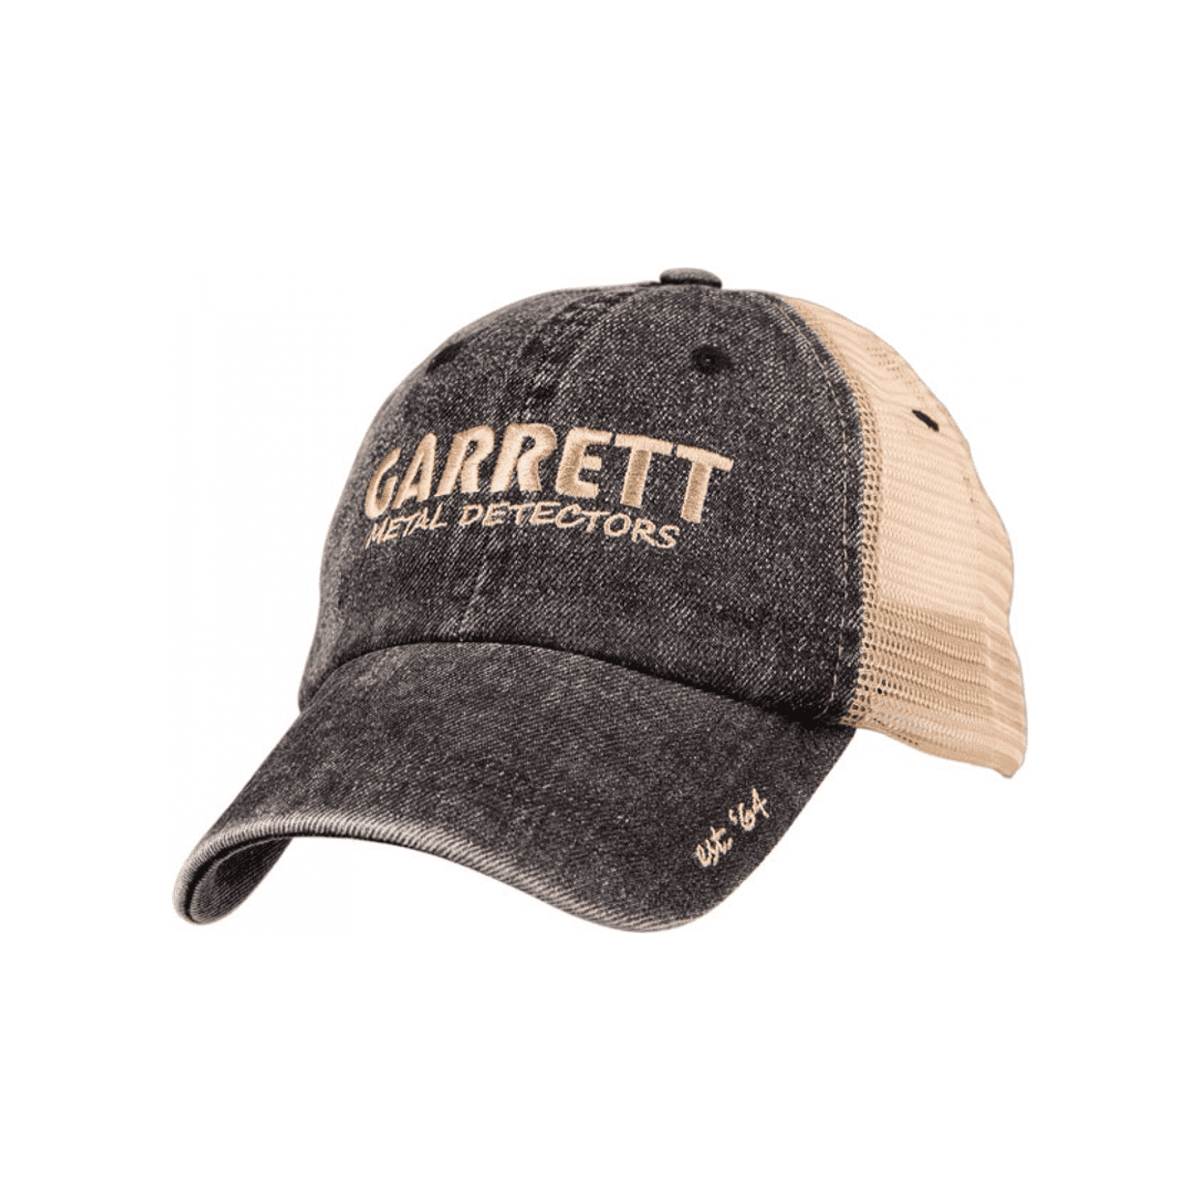 Garrett EST '64 Cap